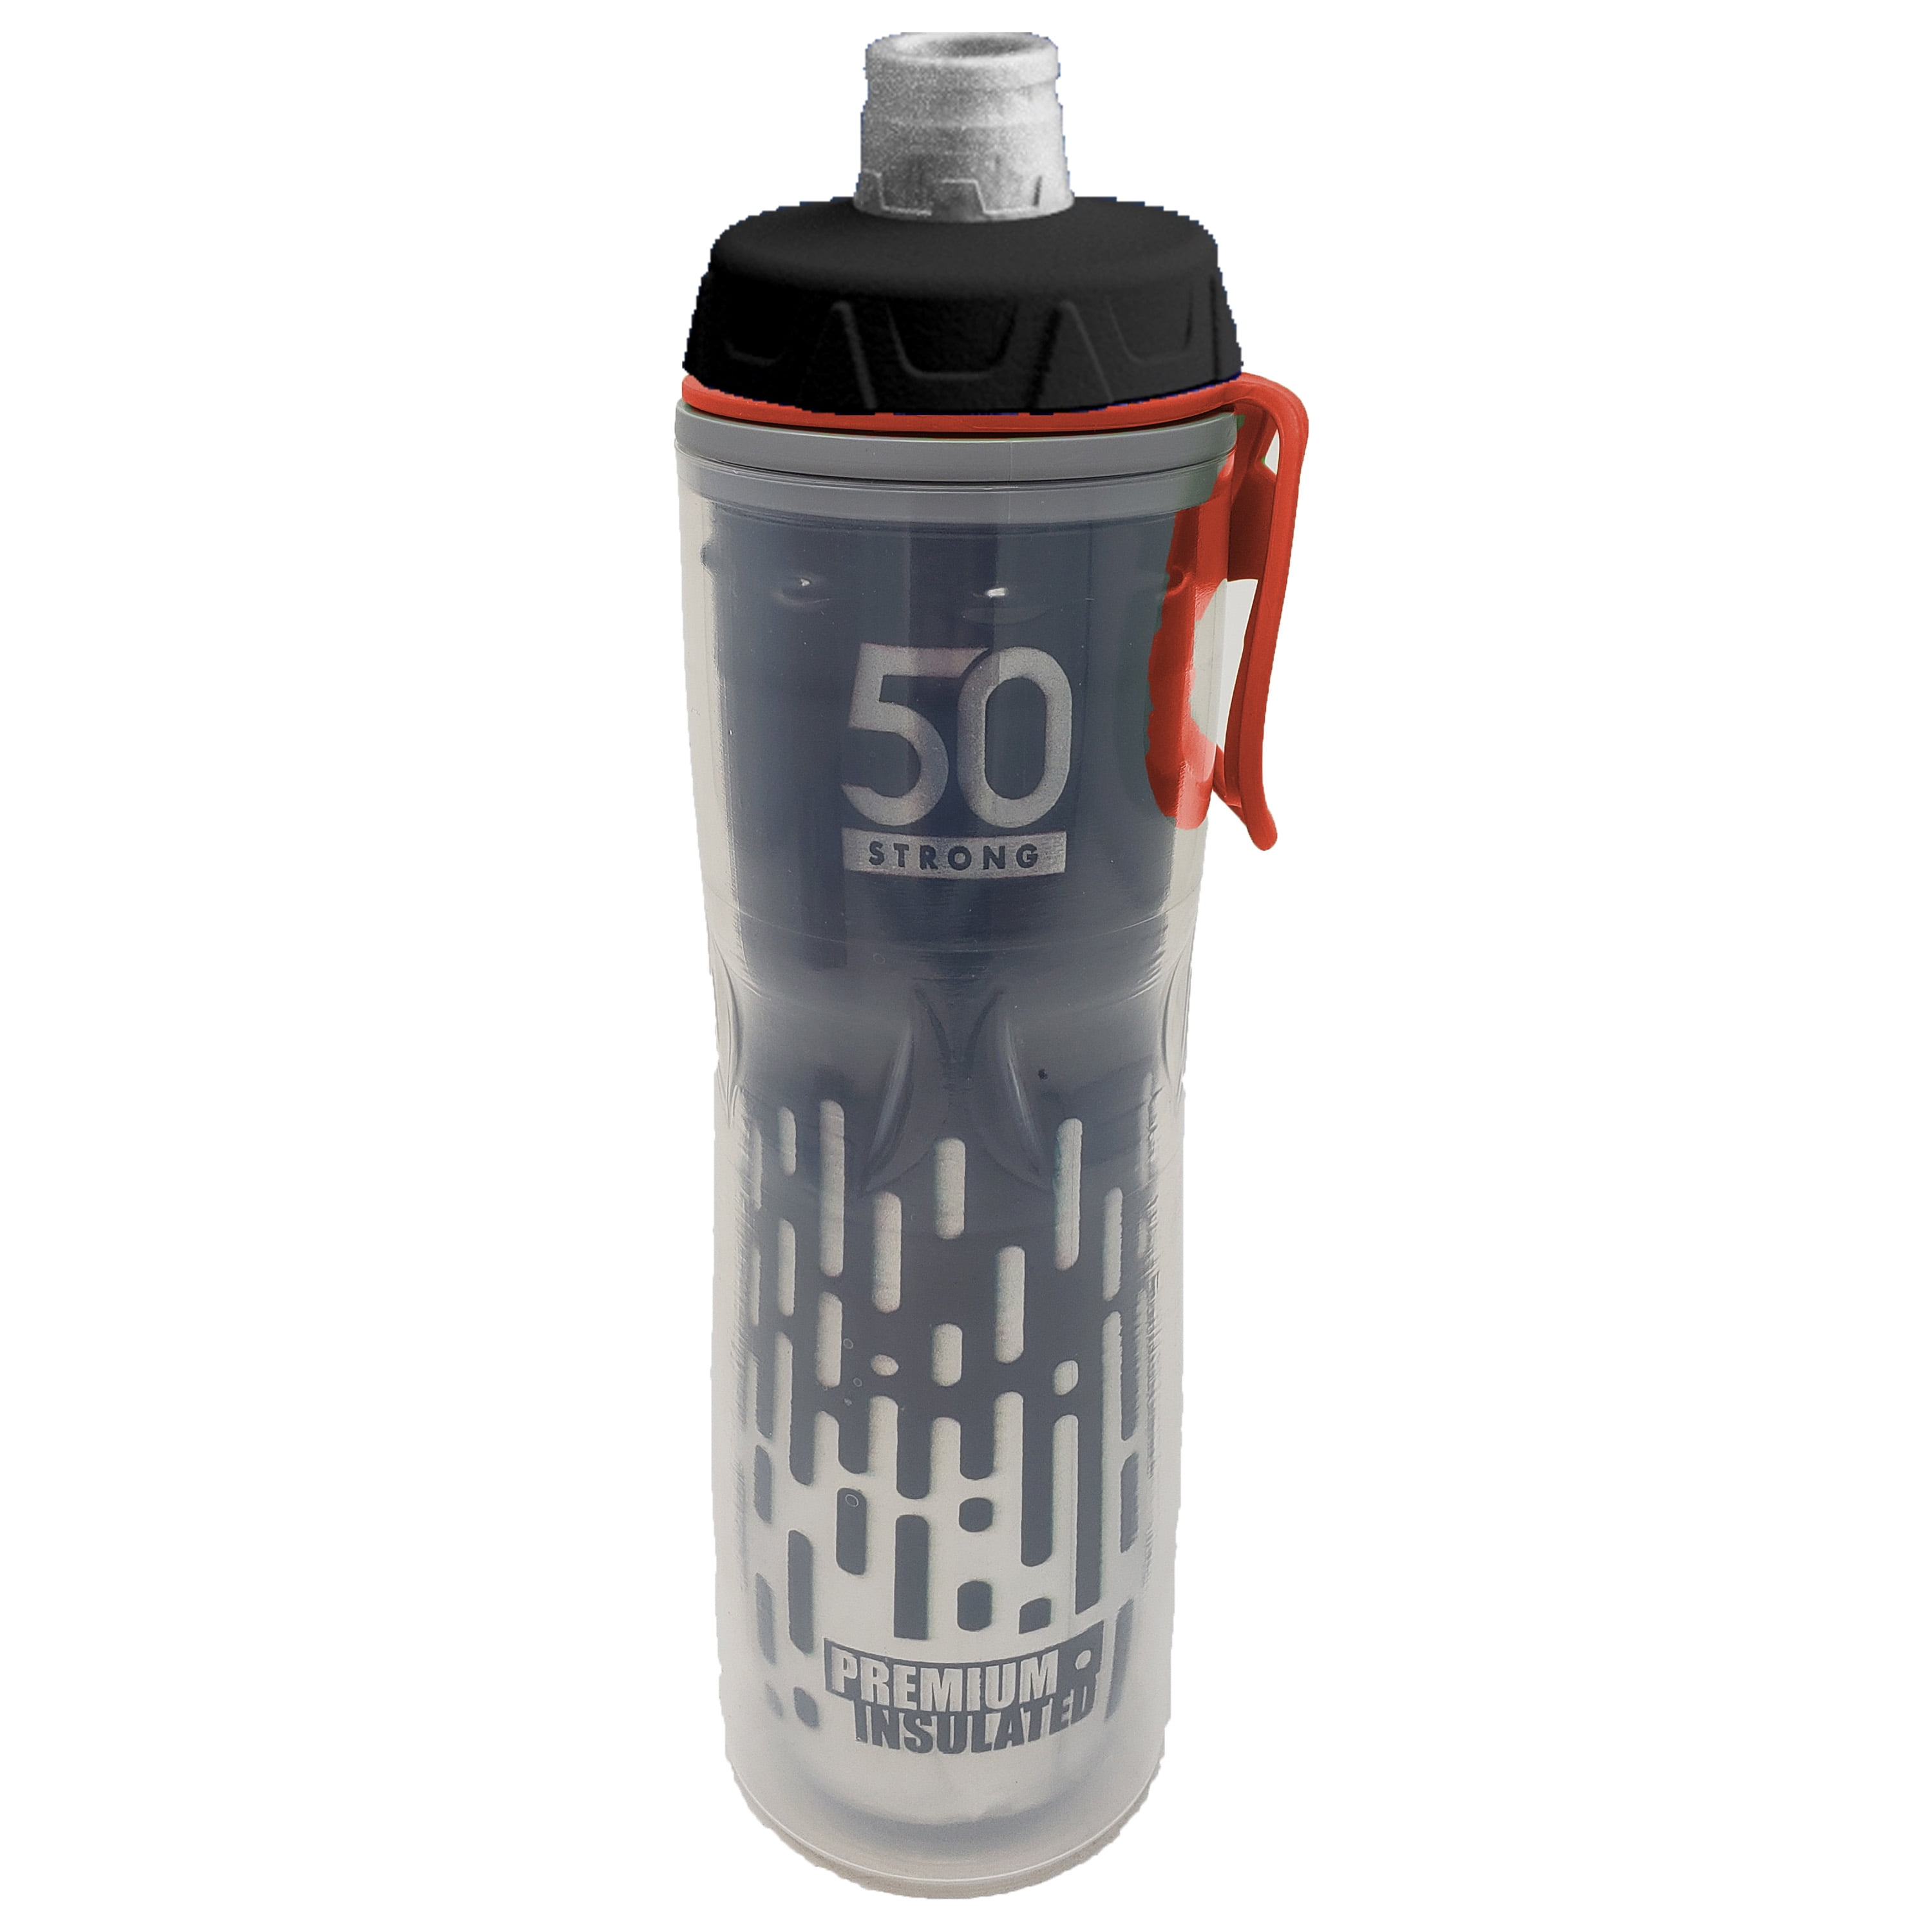 50 Strong Premium Insulated Water Bottle 24 oz - Walmart.com